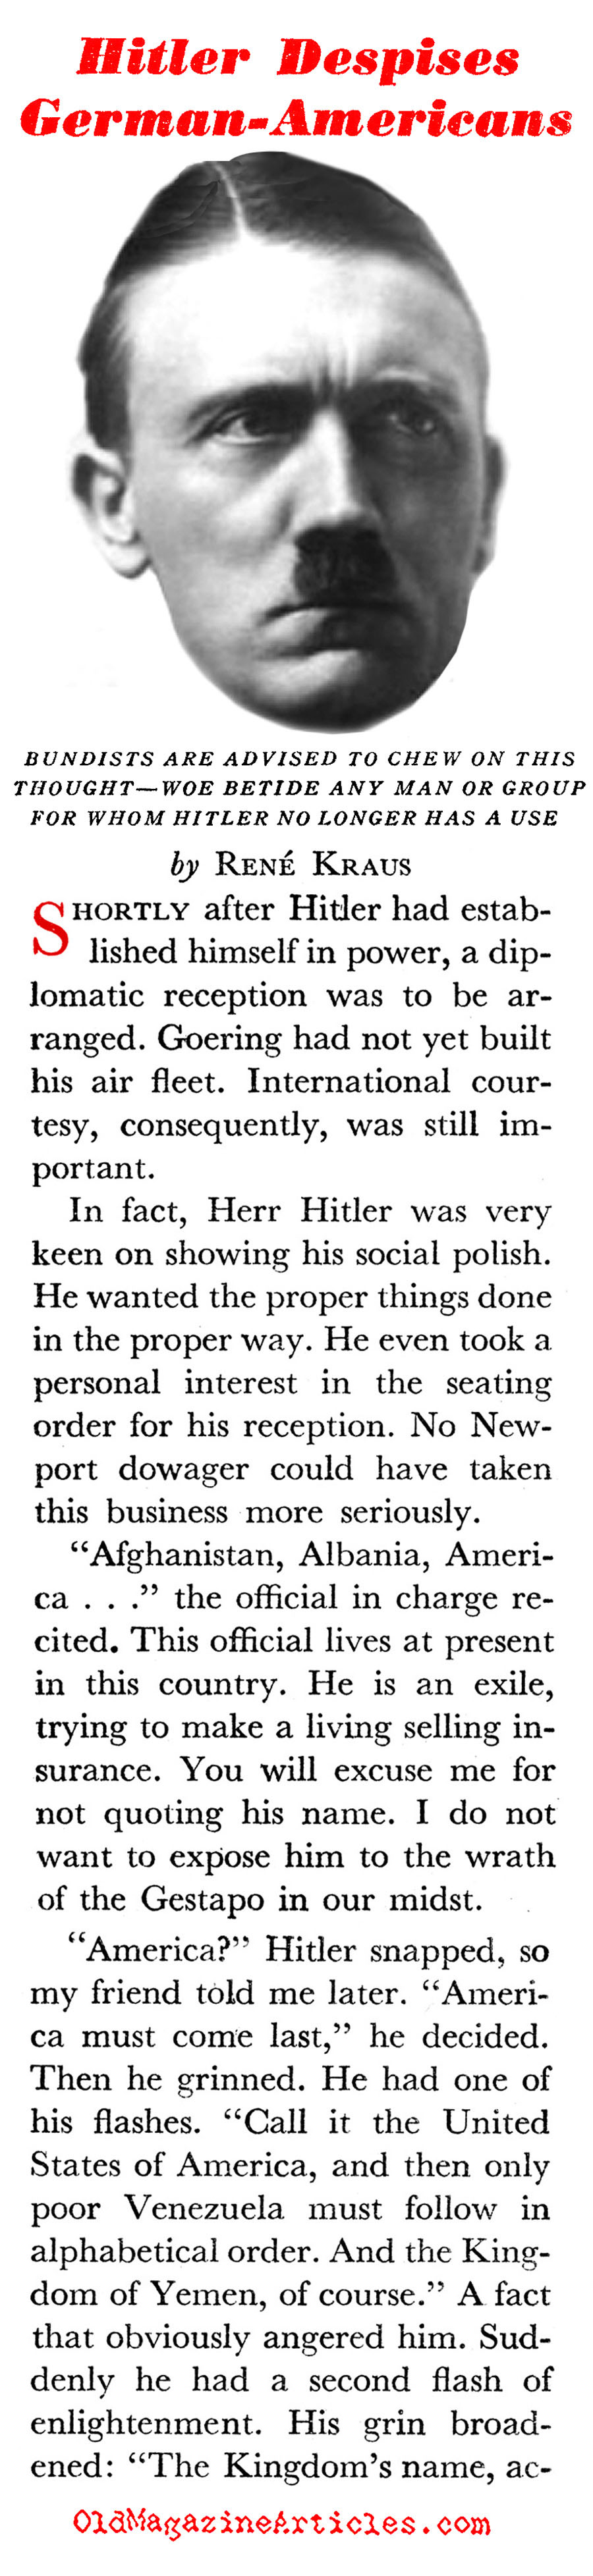 Adolf Hitler and the German-Americans (Coronet Magazine, 1941)